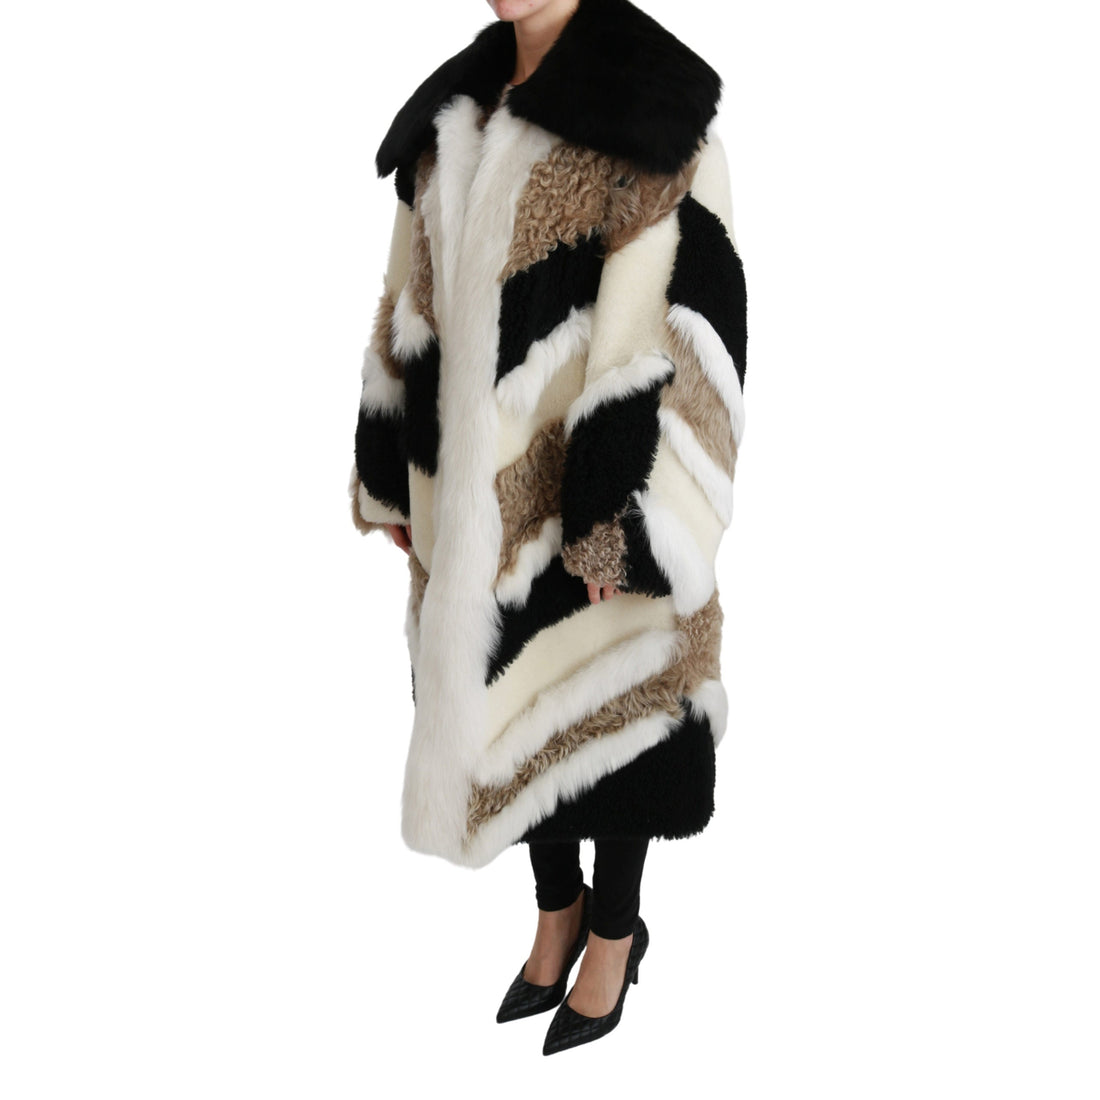 Dolce & Gabbana Sheep Fur Shearling Cape Jacket Coat - Paris Deluxe